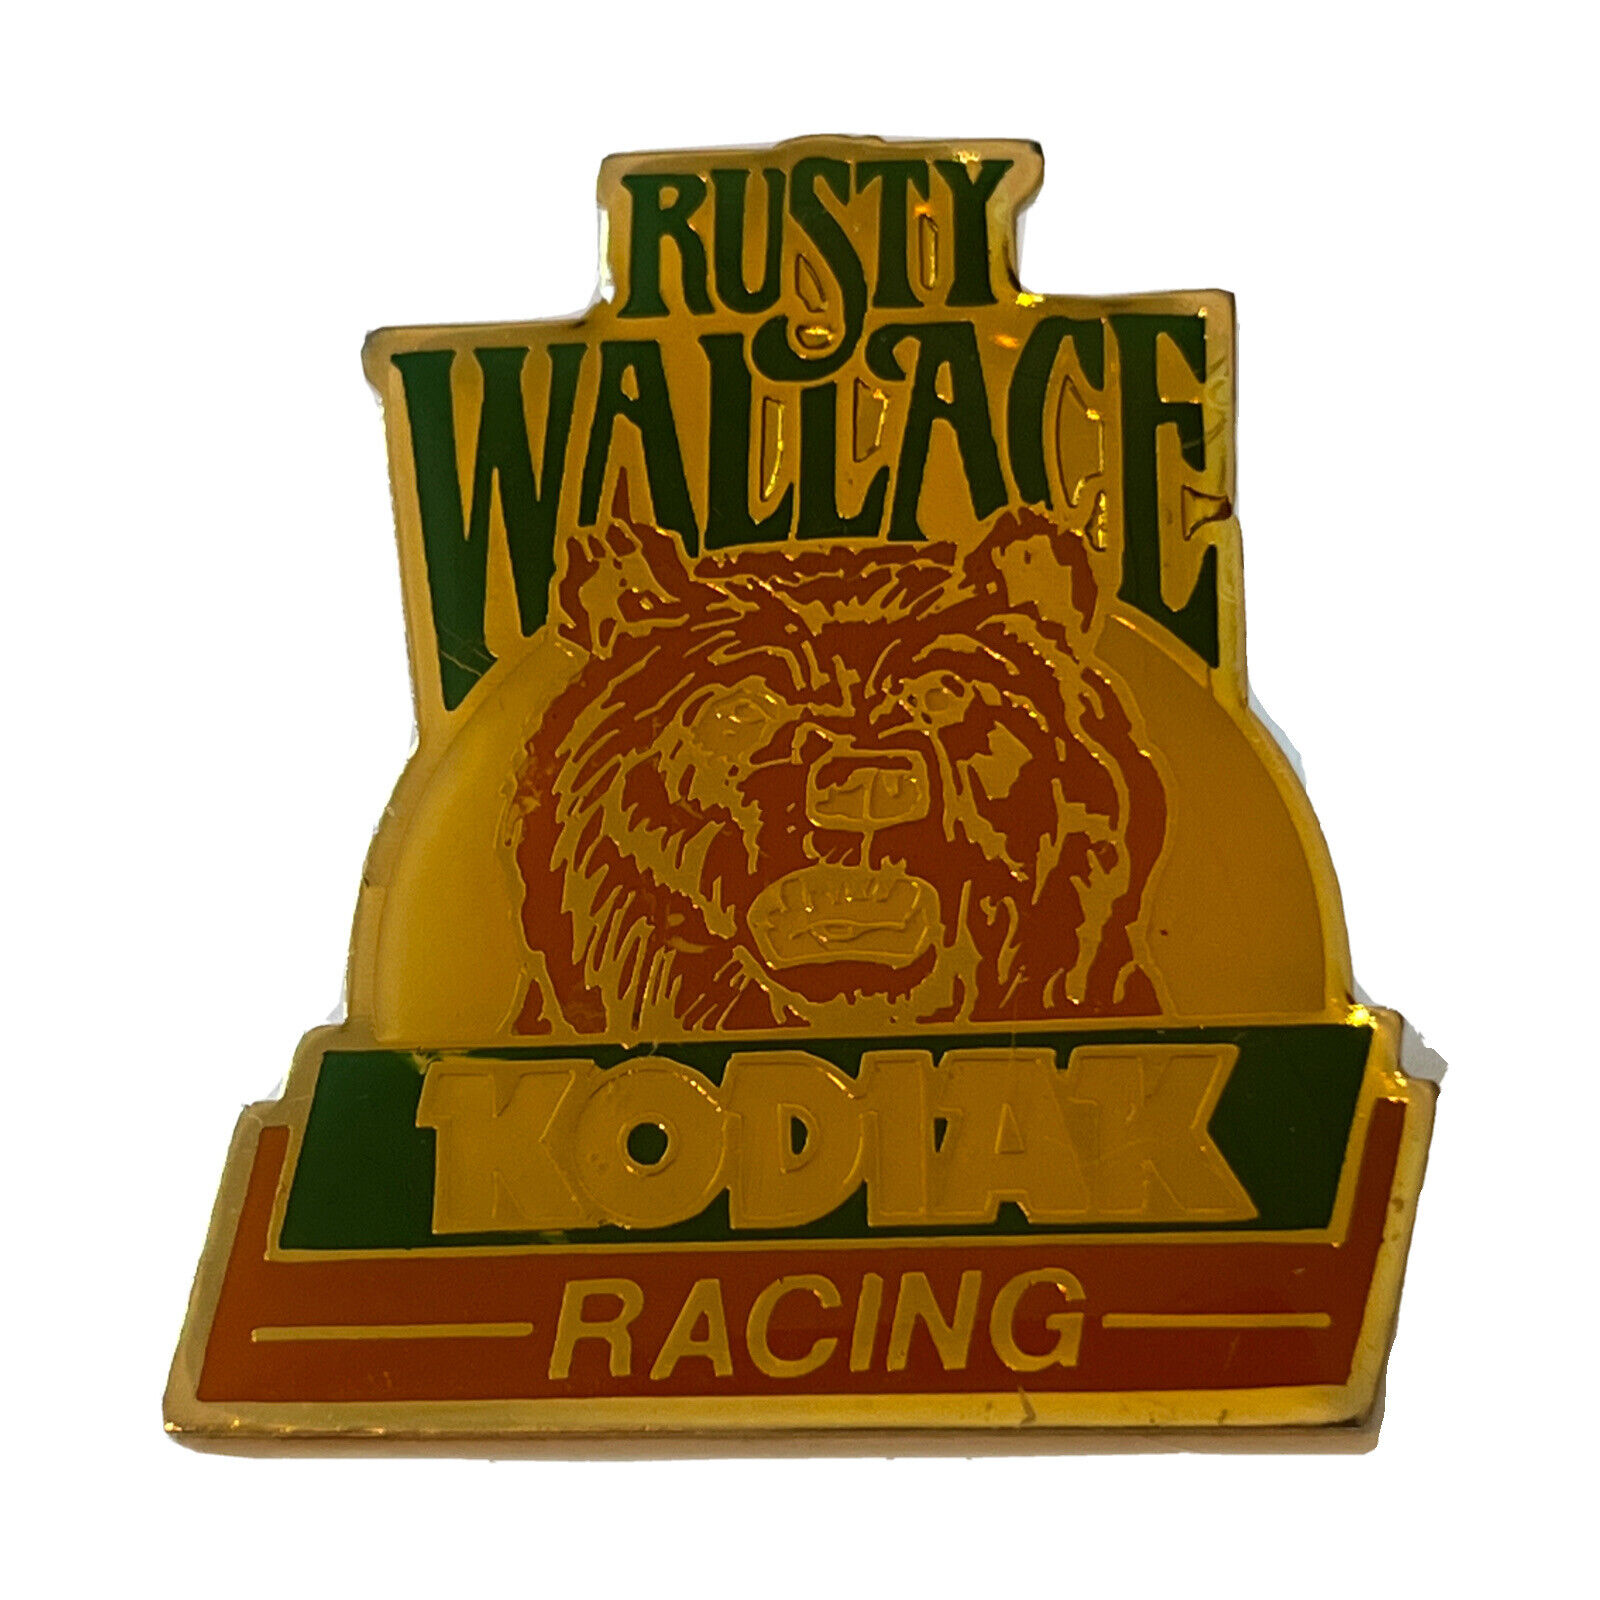 Rusty Wallace Kodiak Racing Team NASCAR Race Car Lapel Pin Pinback